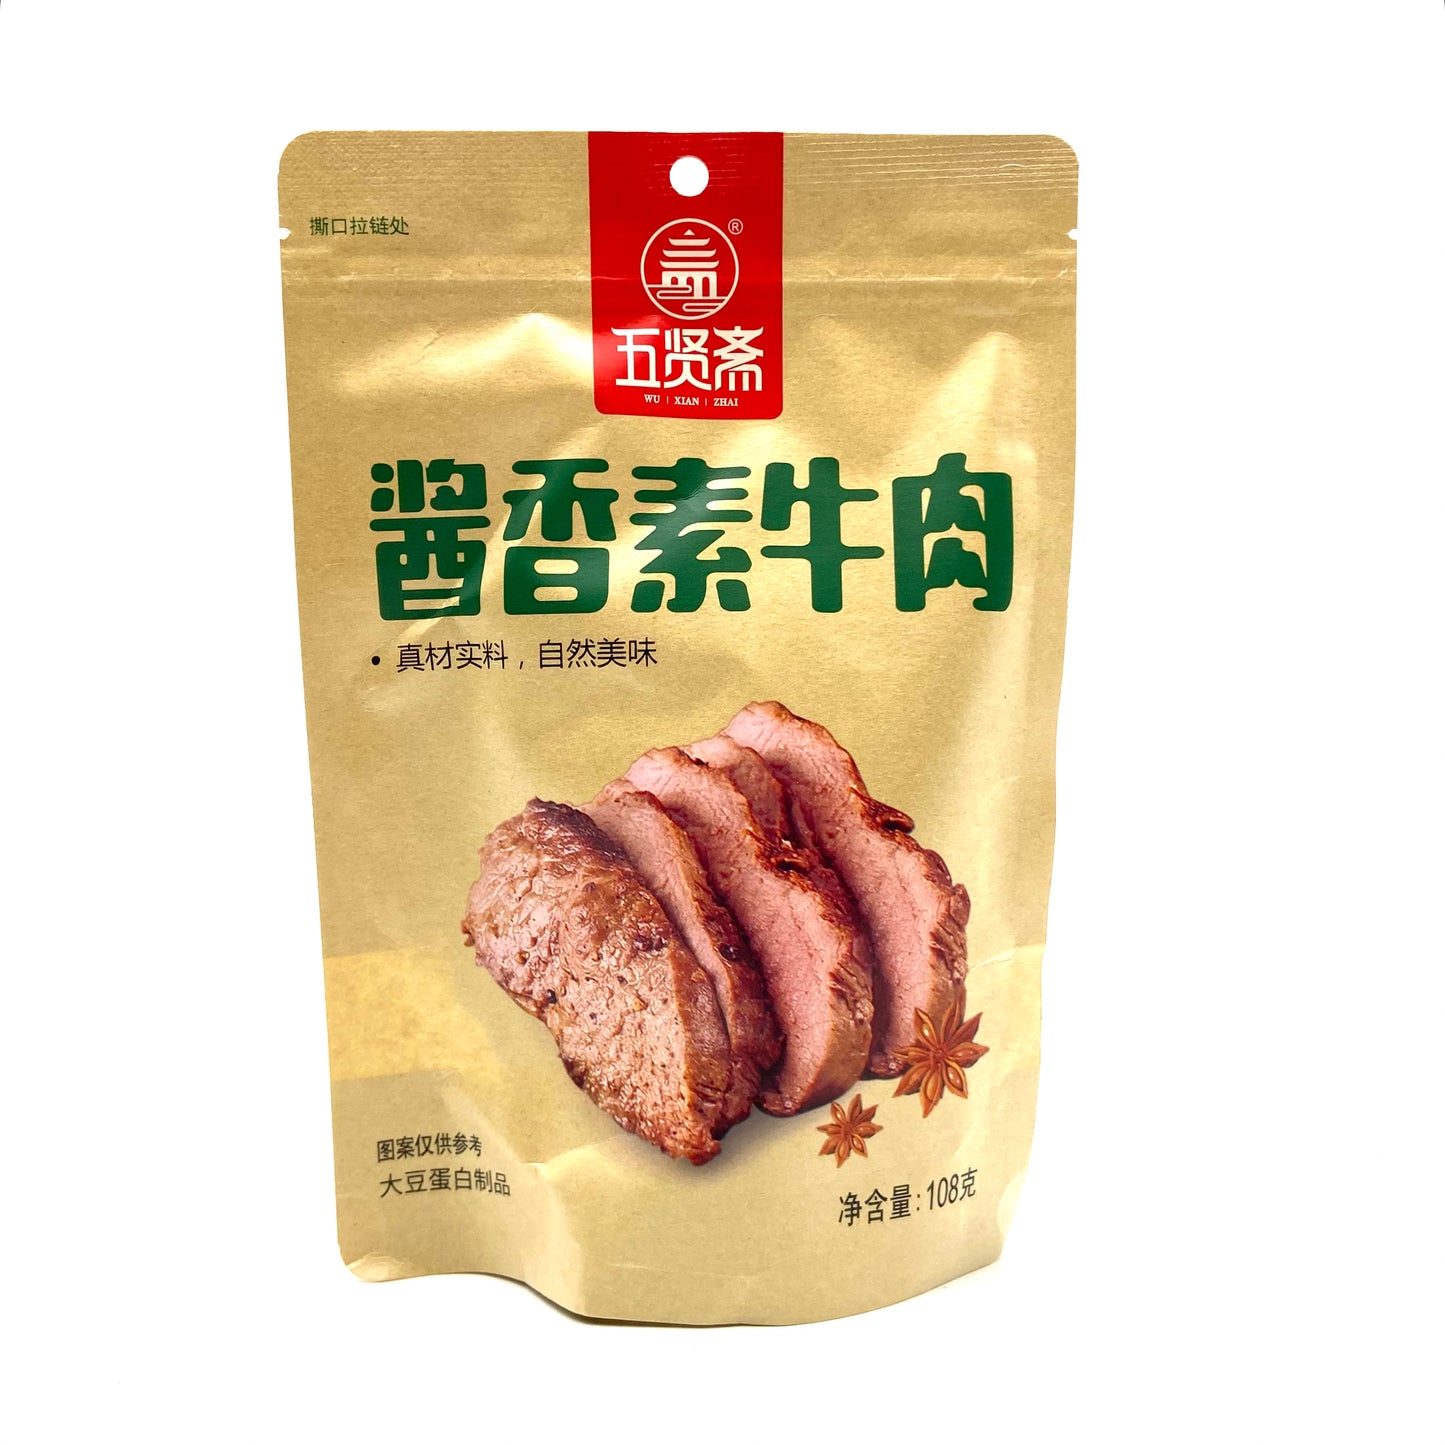 WFZ Snack di Soia Salato 108g 五贤斋酱香素牛肉